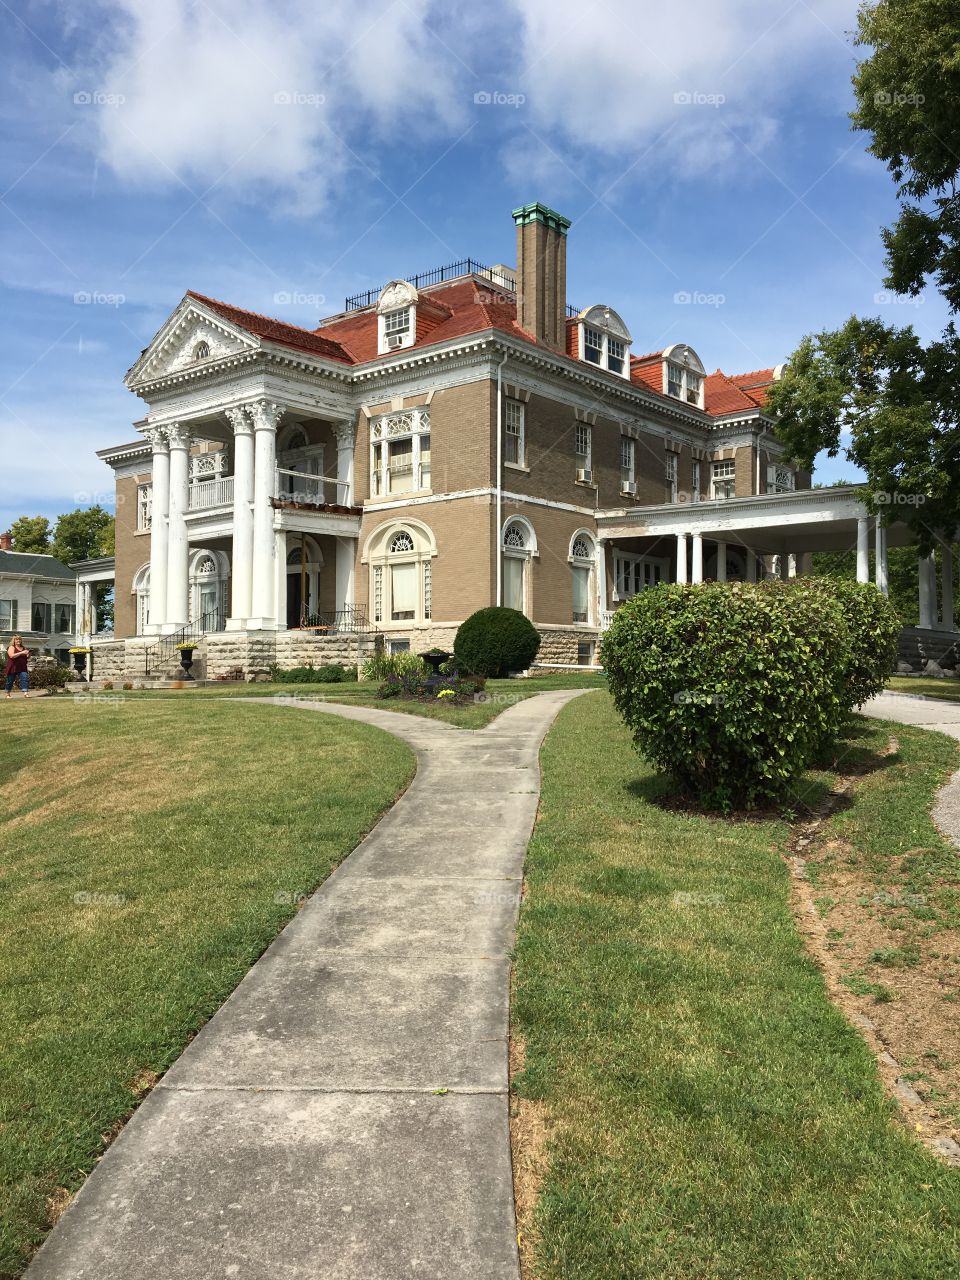 Rockcliffe Mansion in Hannibal, Missouri 